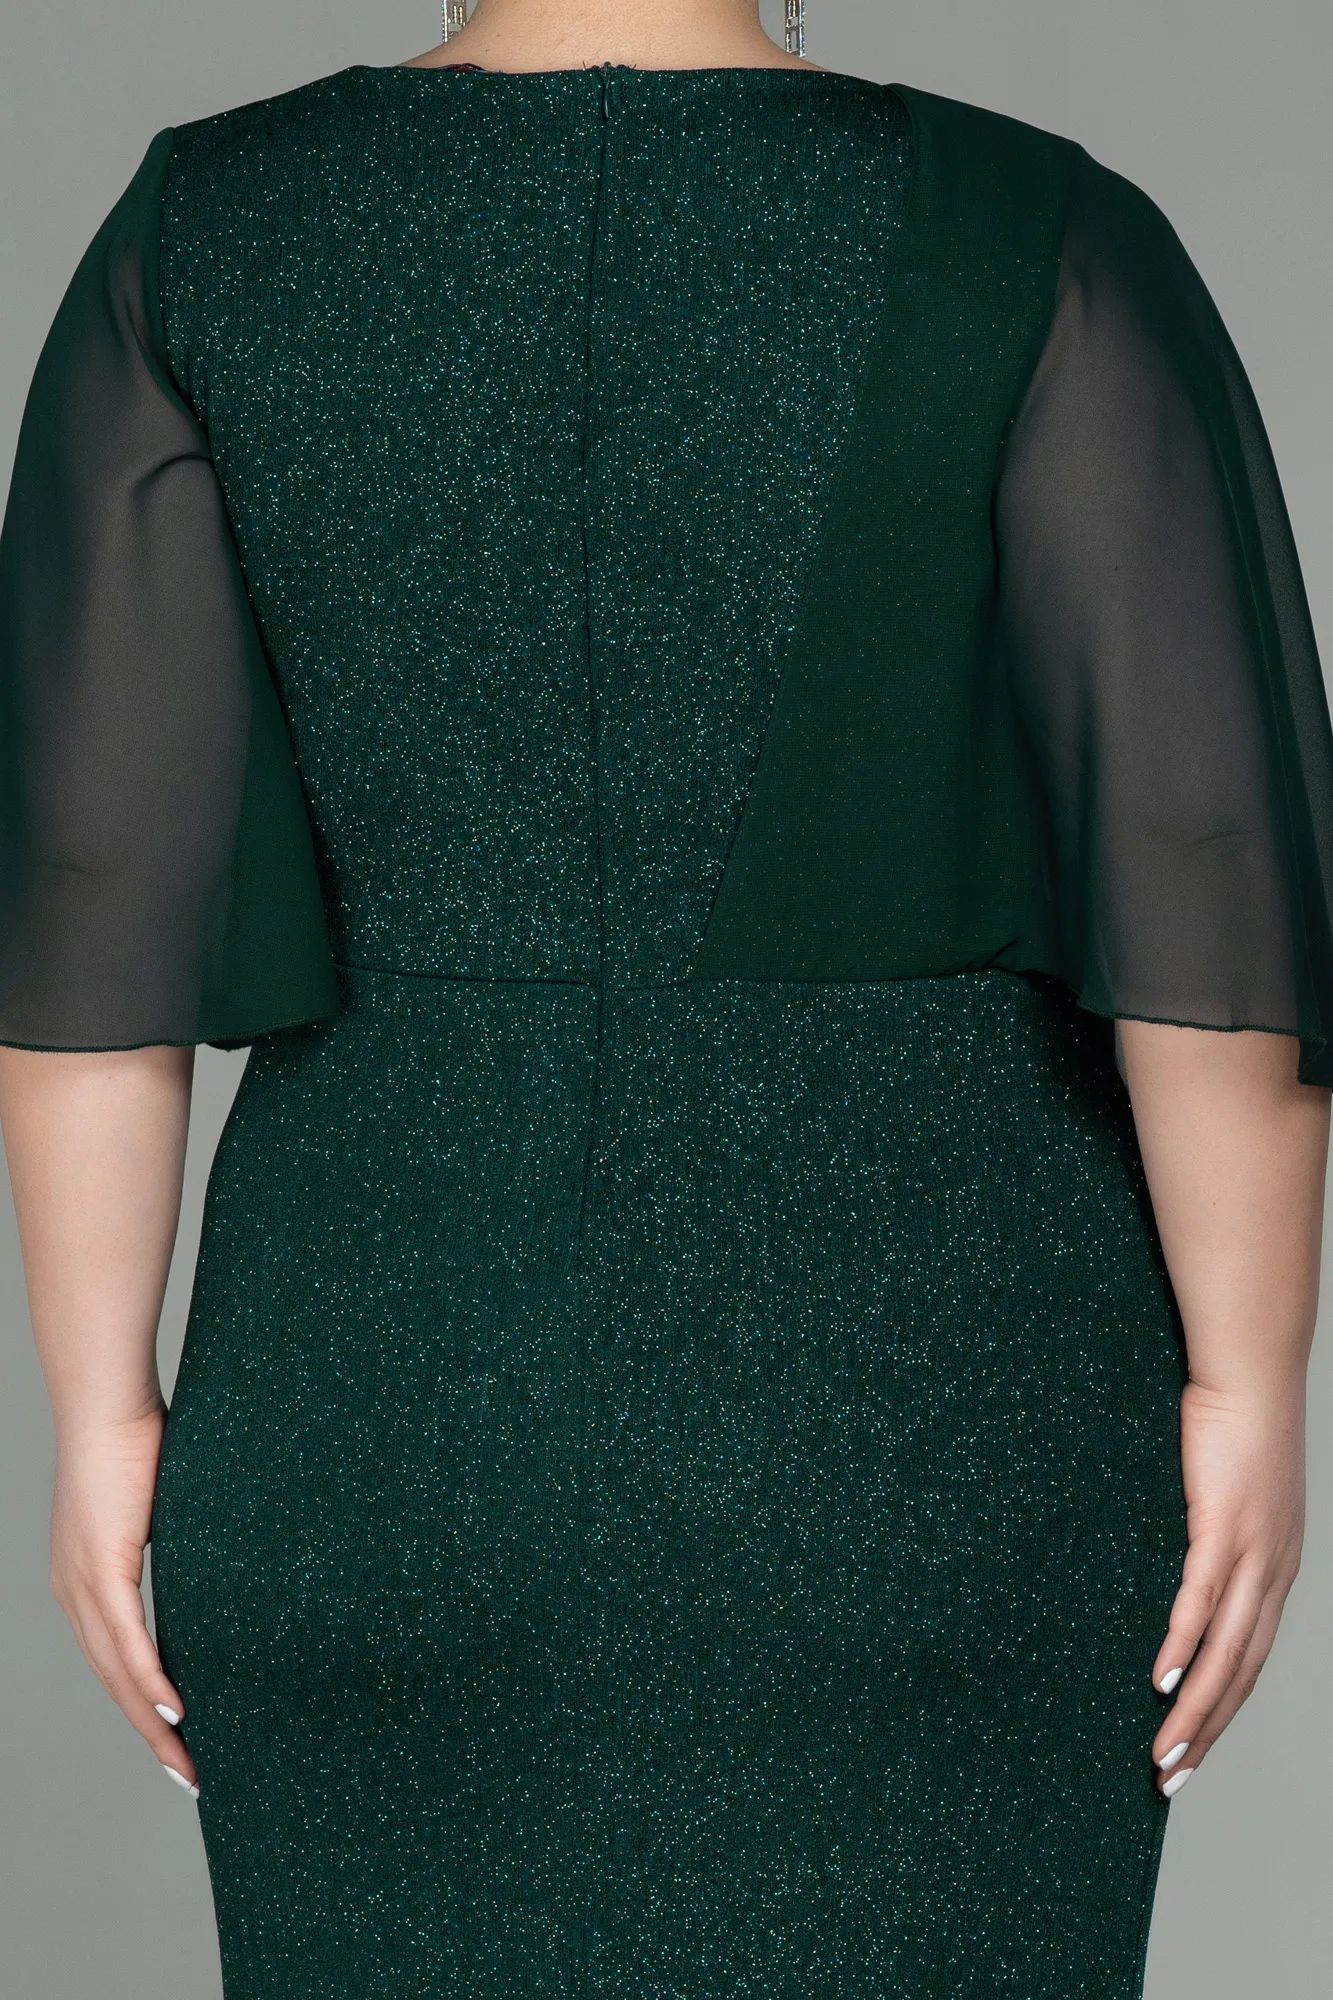 Emerald Green-Long Plus Size Evening Dress ABU2979